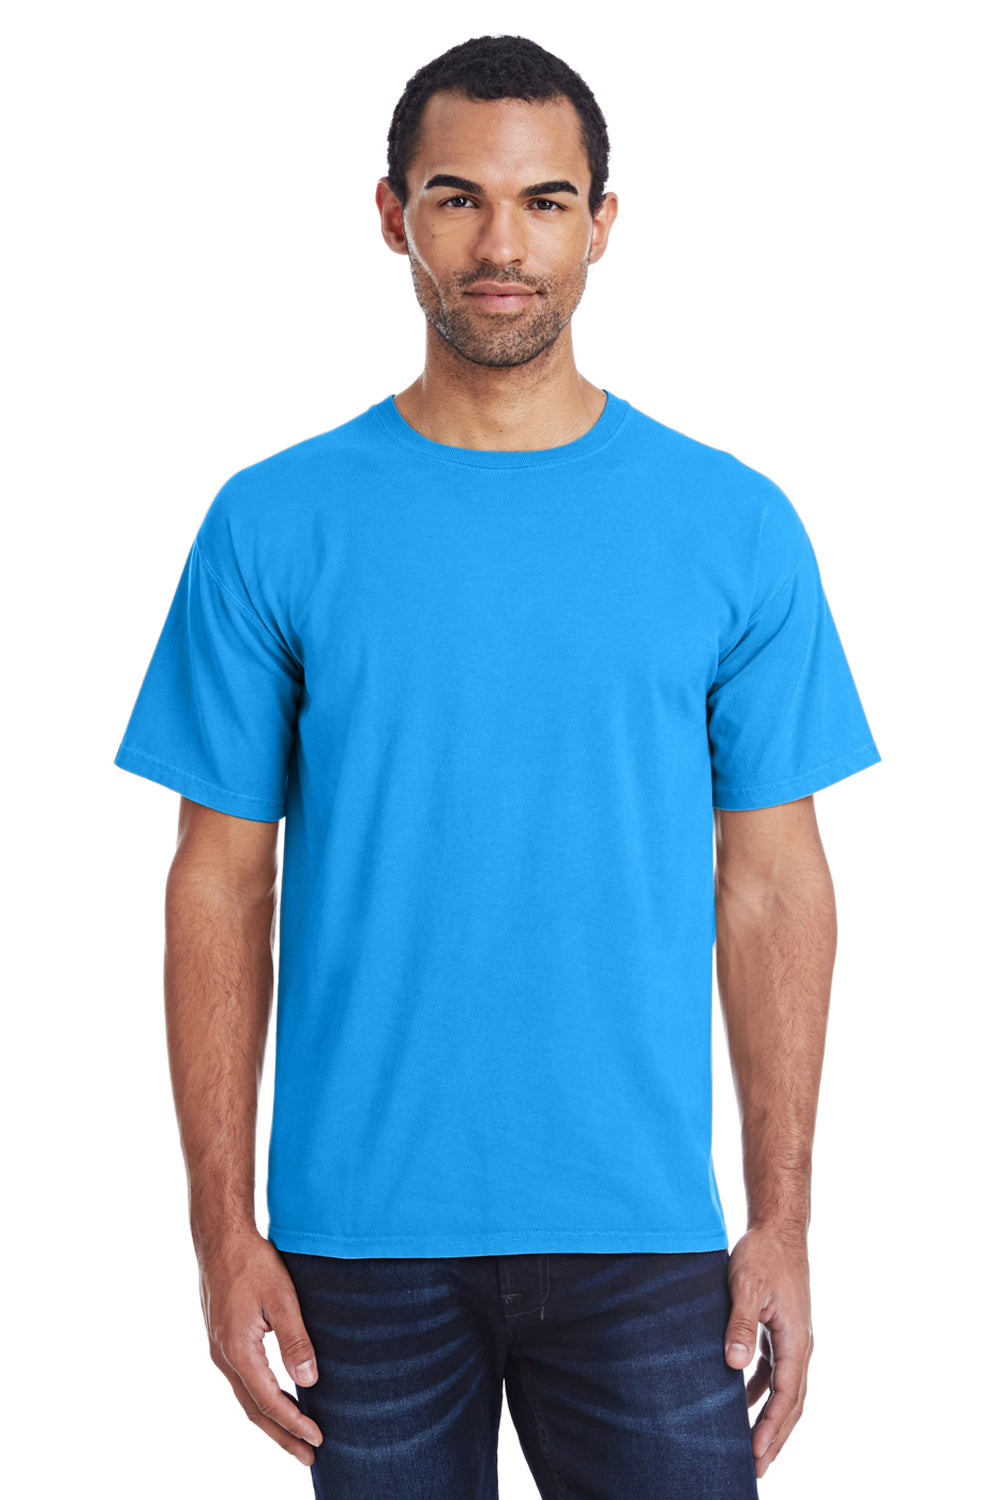 ComfortWash By Hanes GDH100 Mens Short Sleeve Crewneck T-Shirt Sky Blue Front